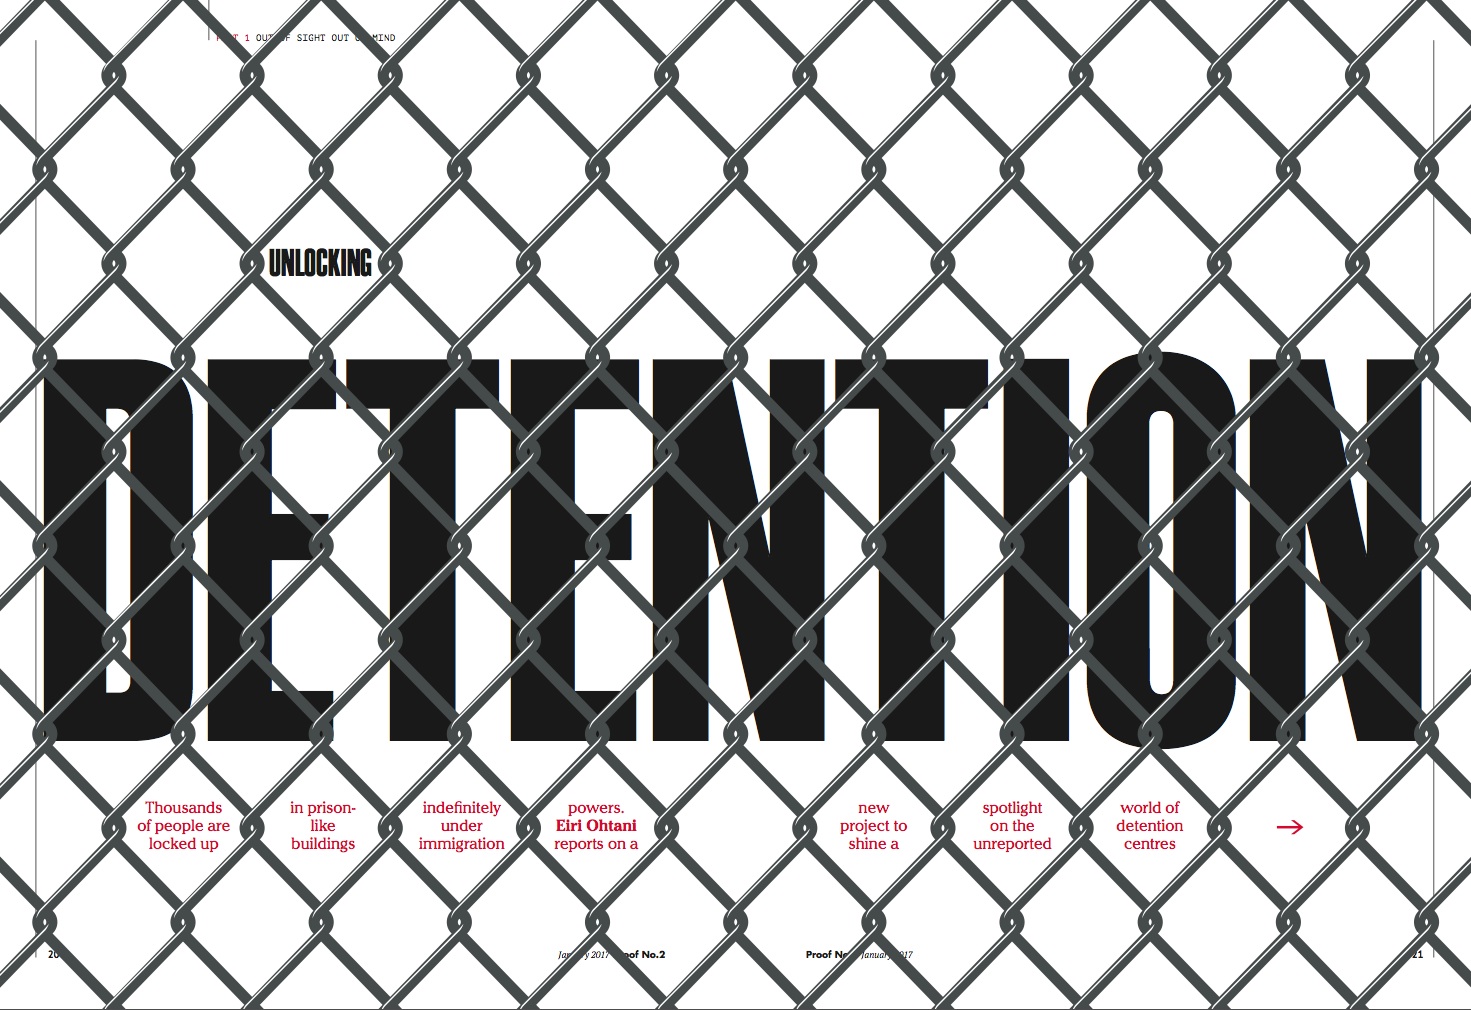 Unlocking detention